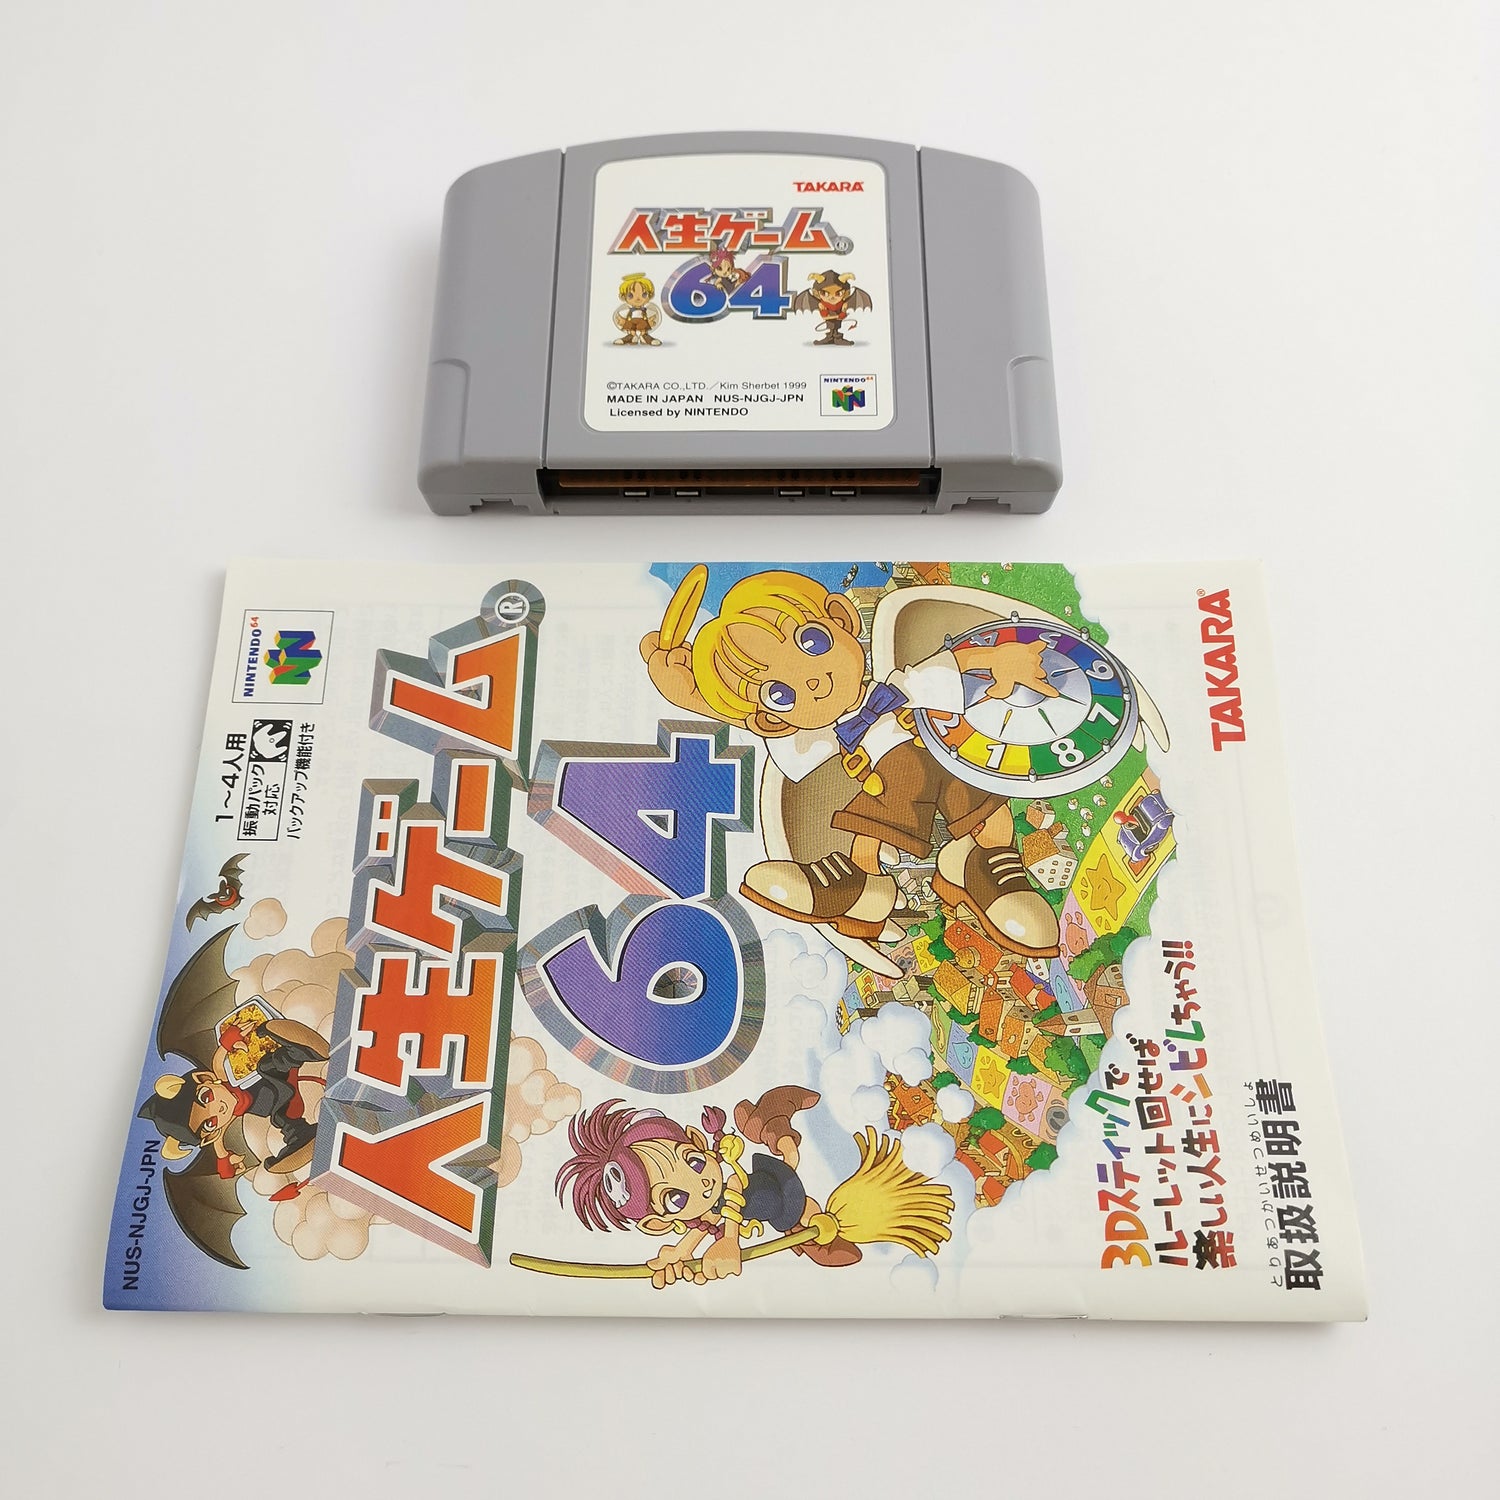 Nintendo 64 game 